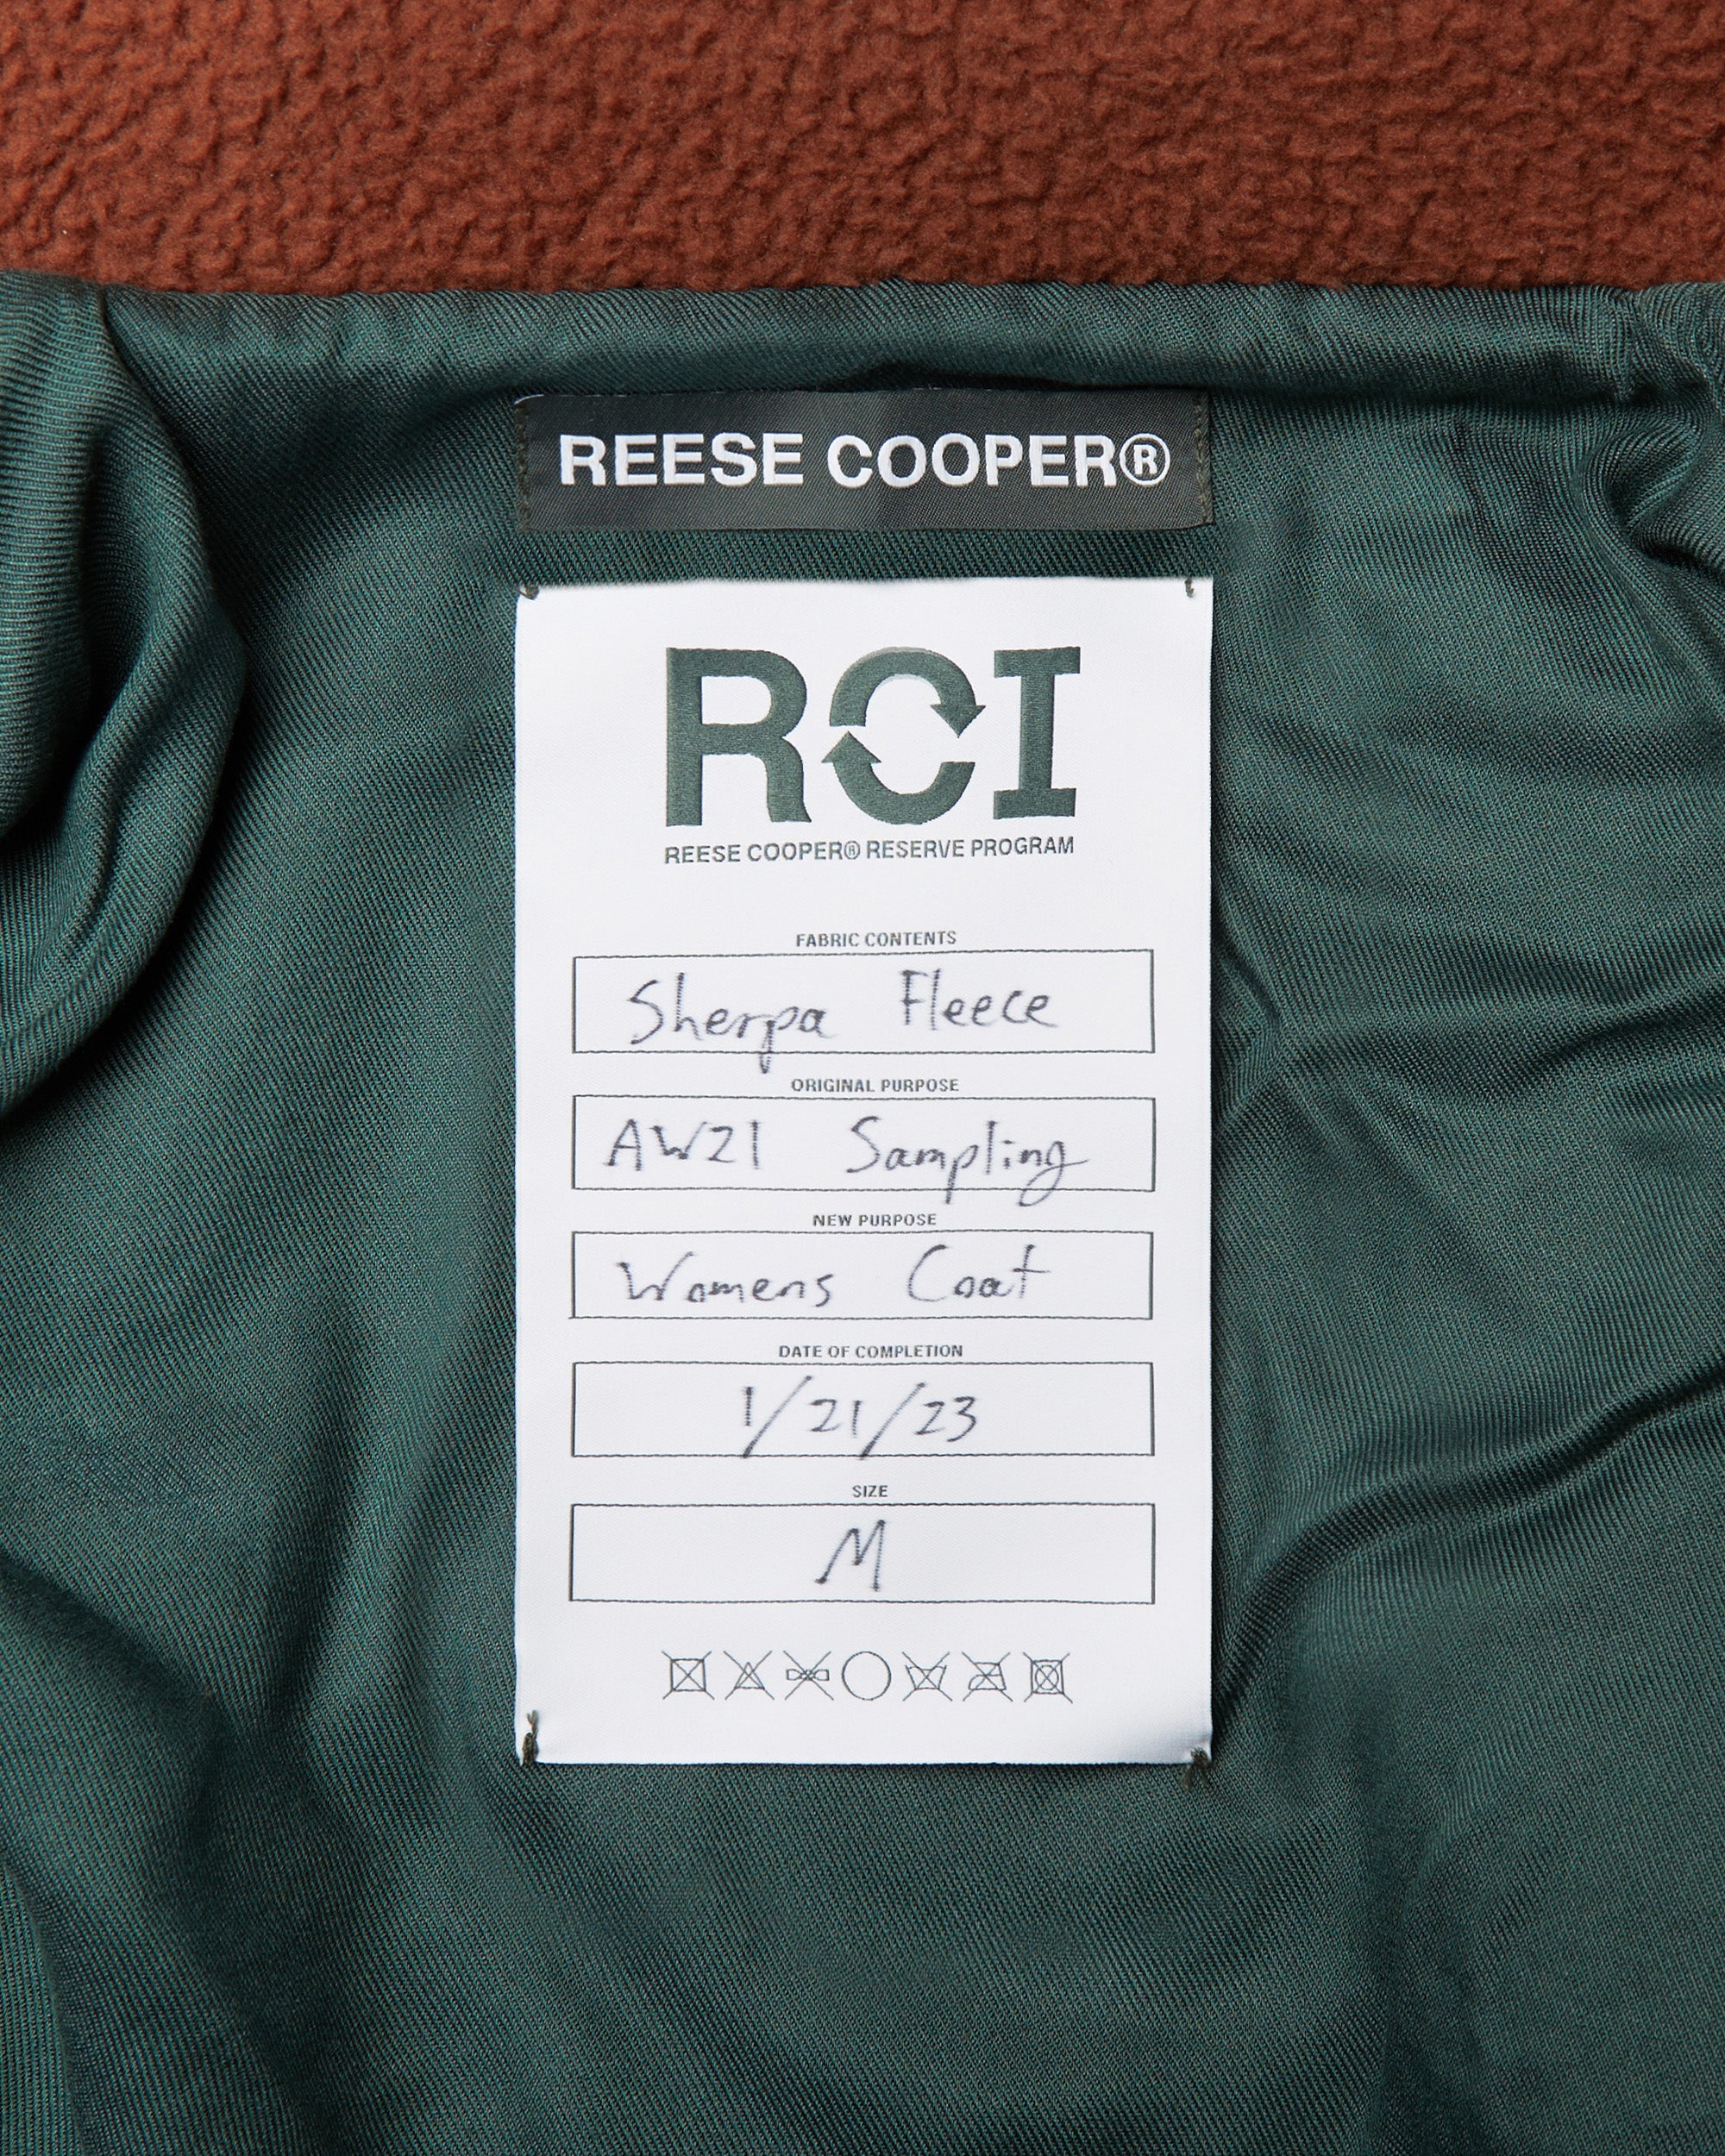 RCI Reserve: Womens Coat in Orange Sherpa Fleece